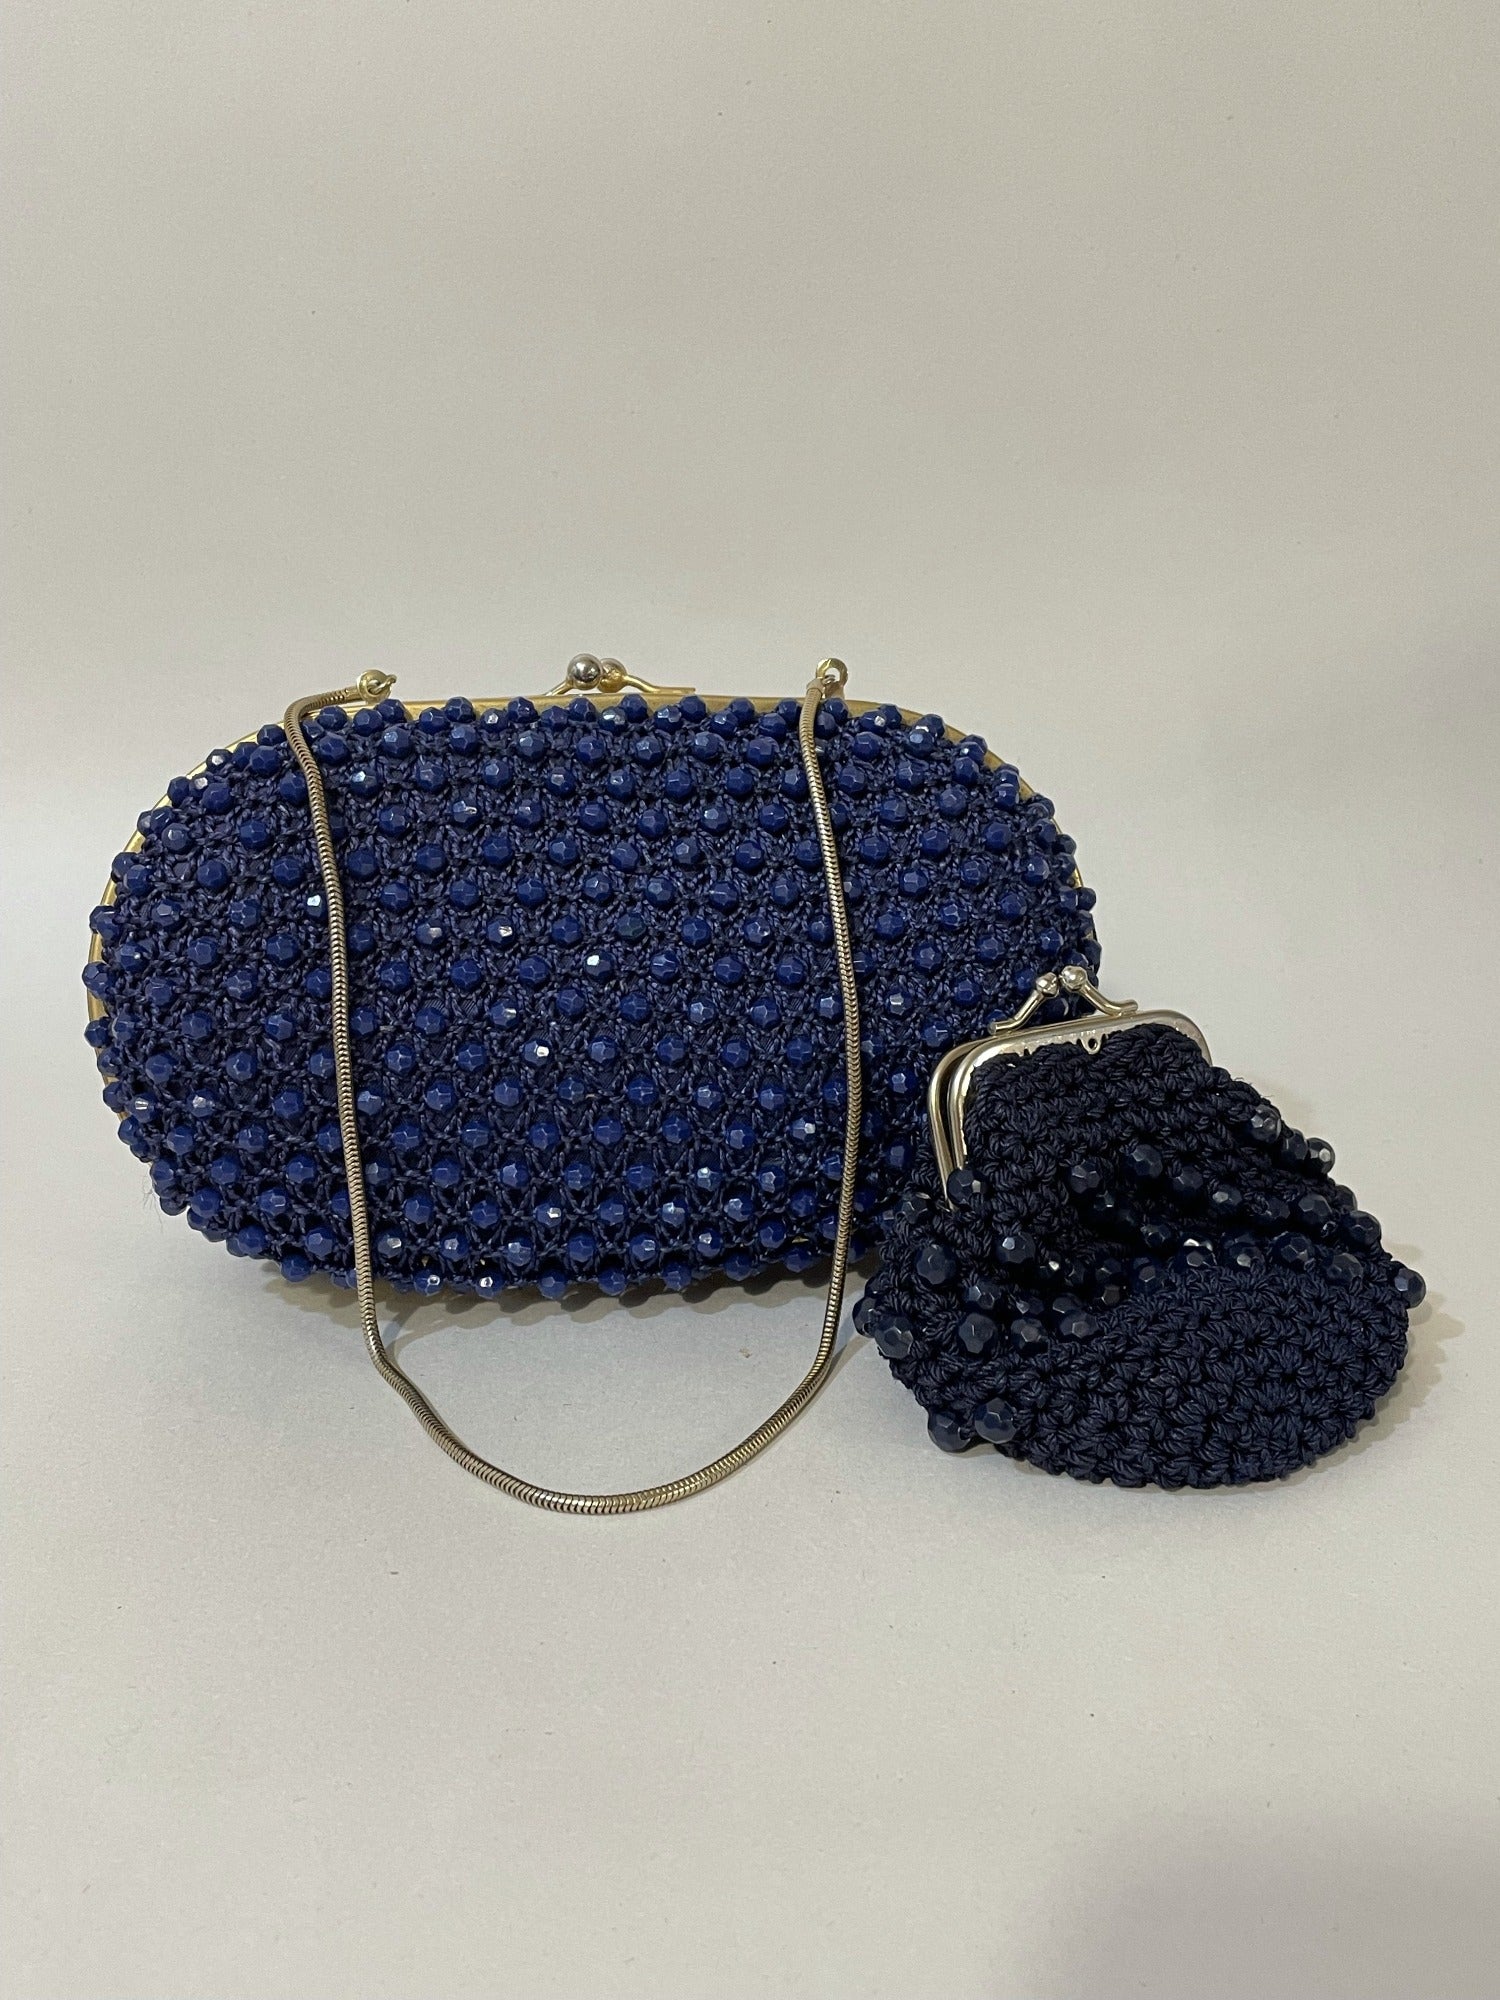 1960s Vintage Blue Beaded Evening Clutch Handbag with Purse